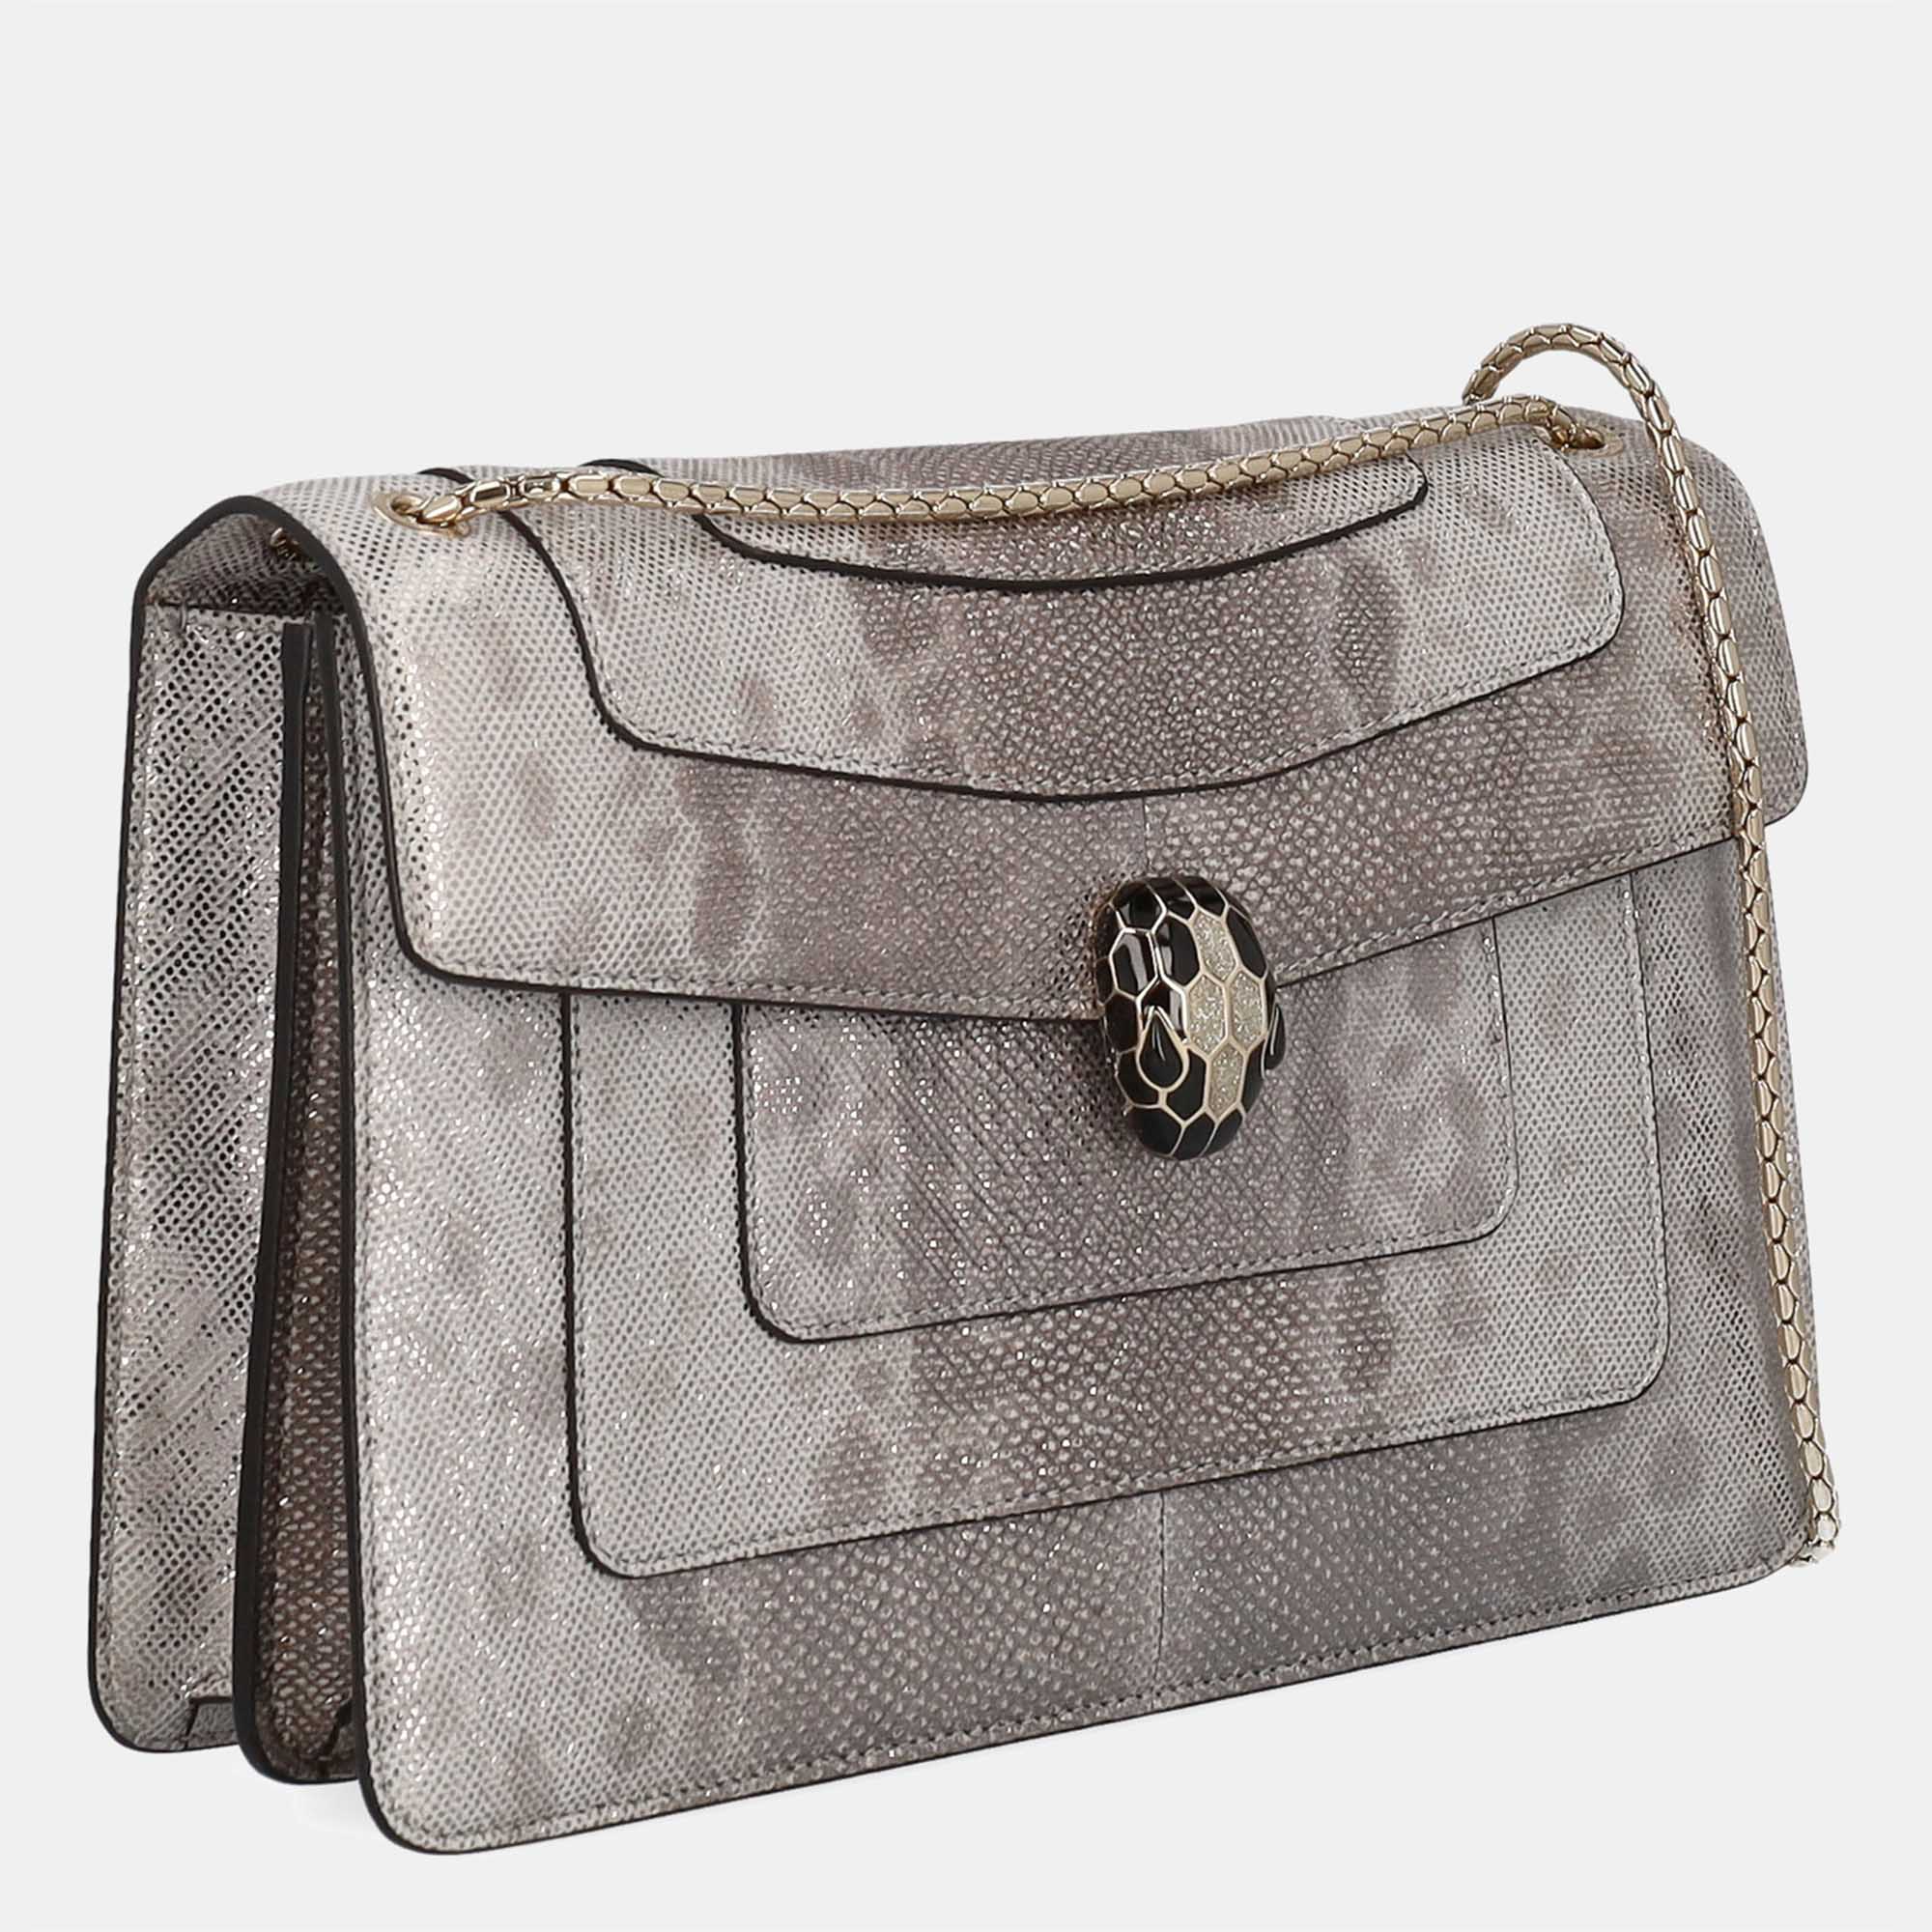 Bvlgari  Women's Leather Shoulder Bag - Grey - One Size